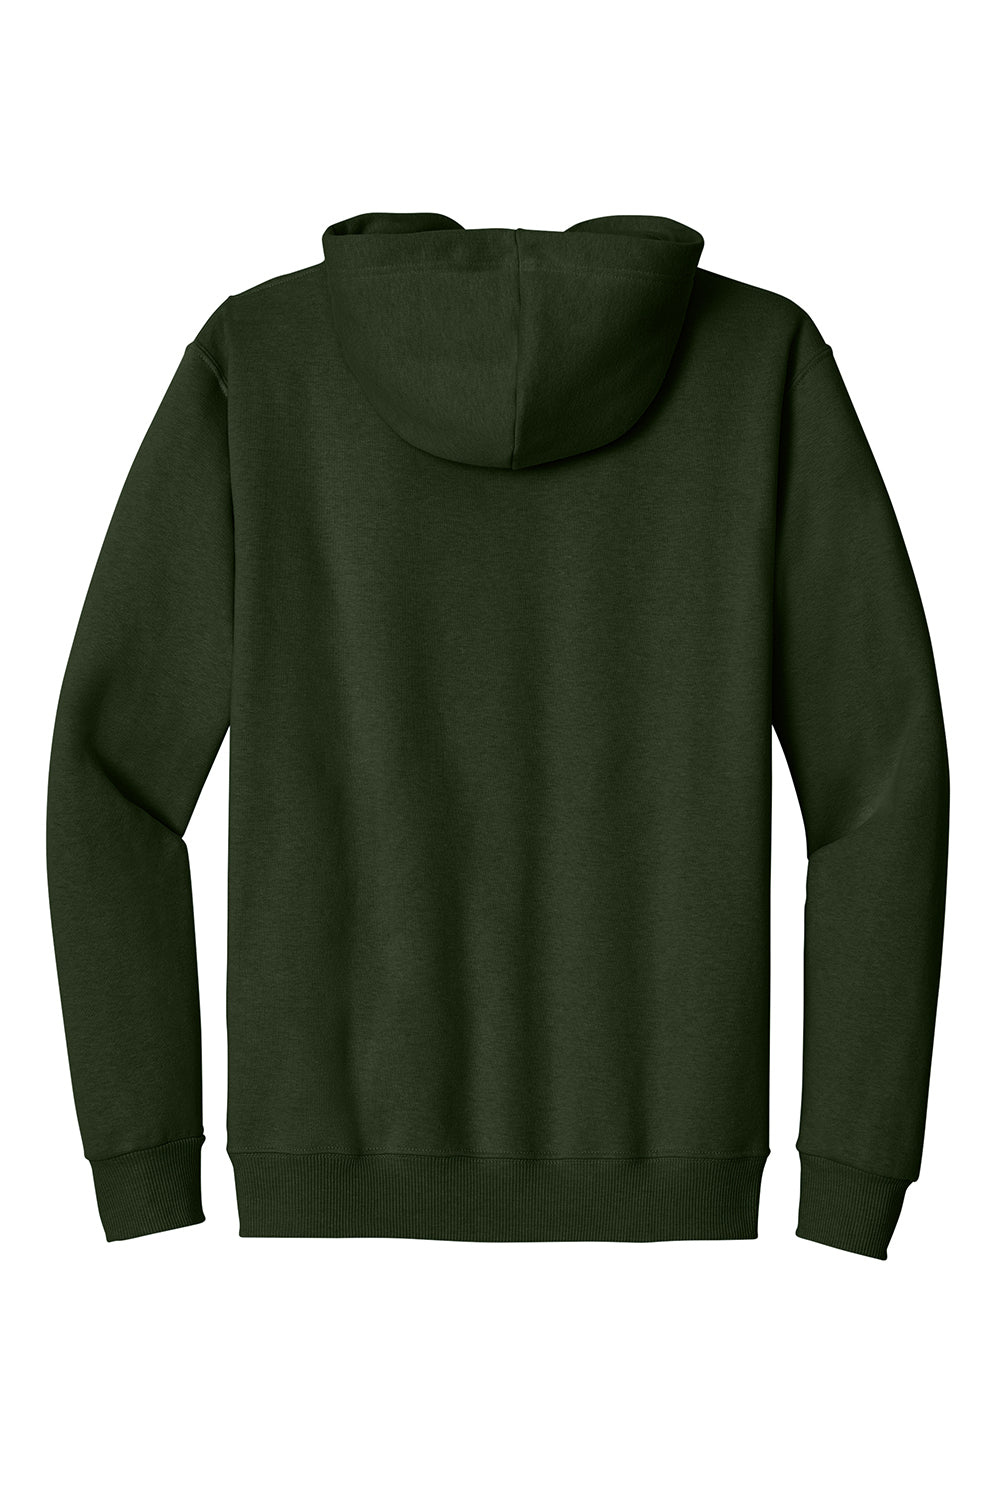 Jerzees 700M Mens Eco Premium Hooded Sweatshirt Hoodie Heather Military Green Flat Back